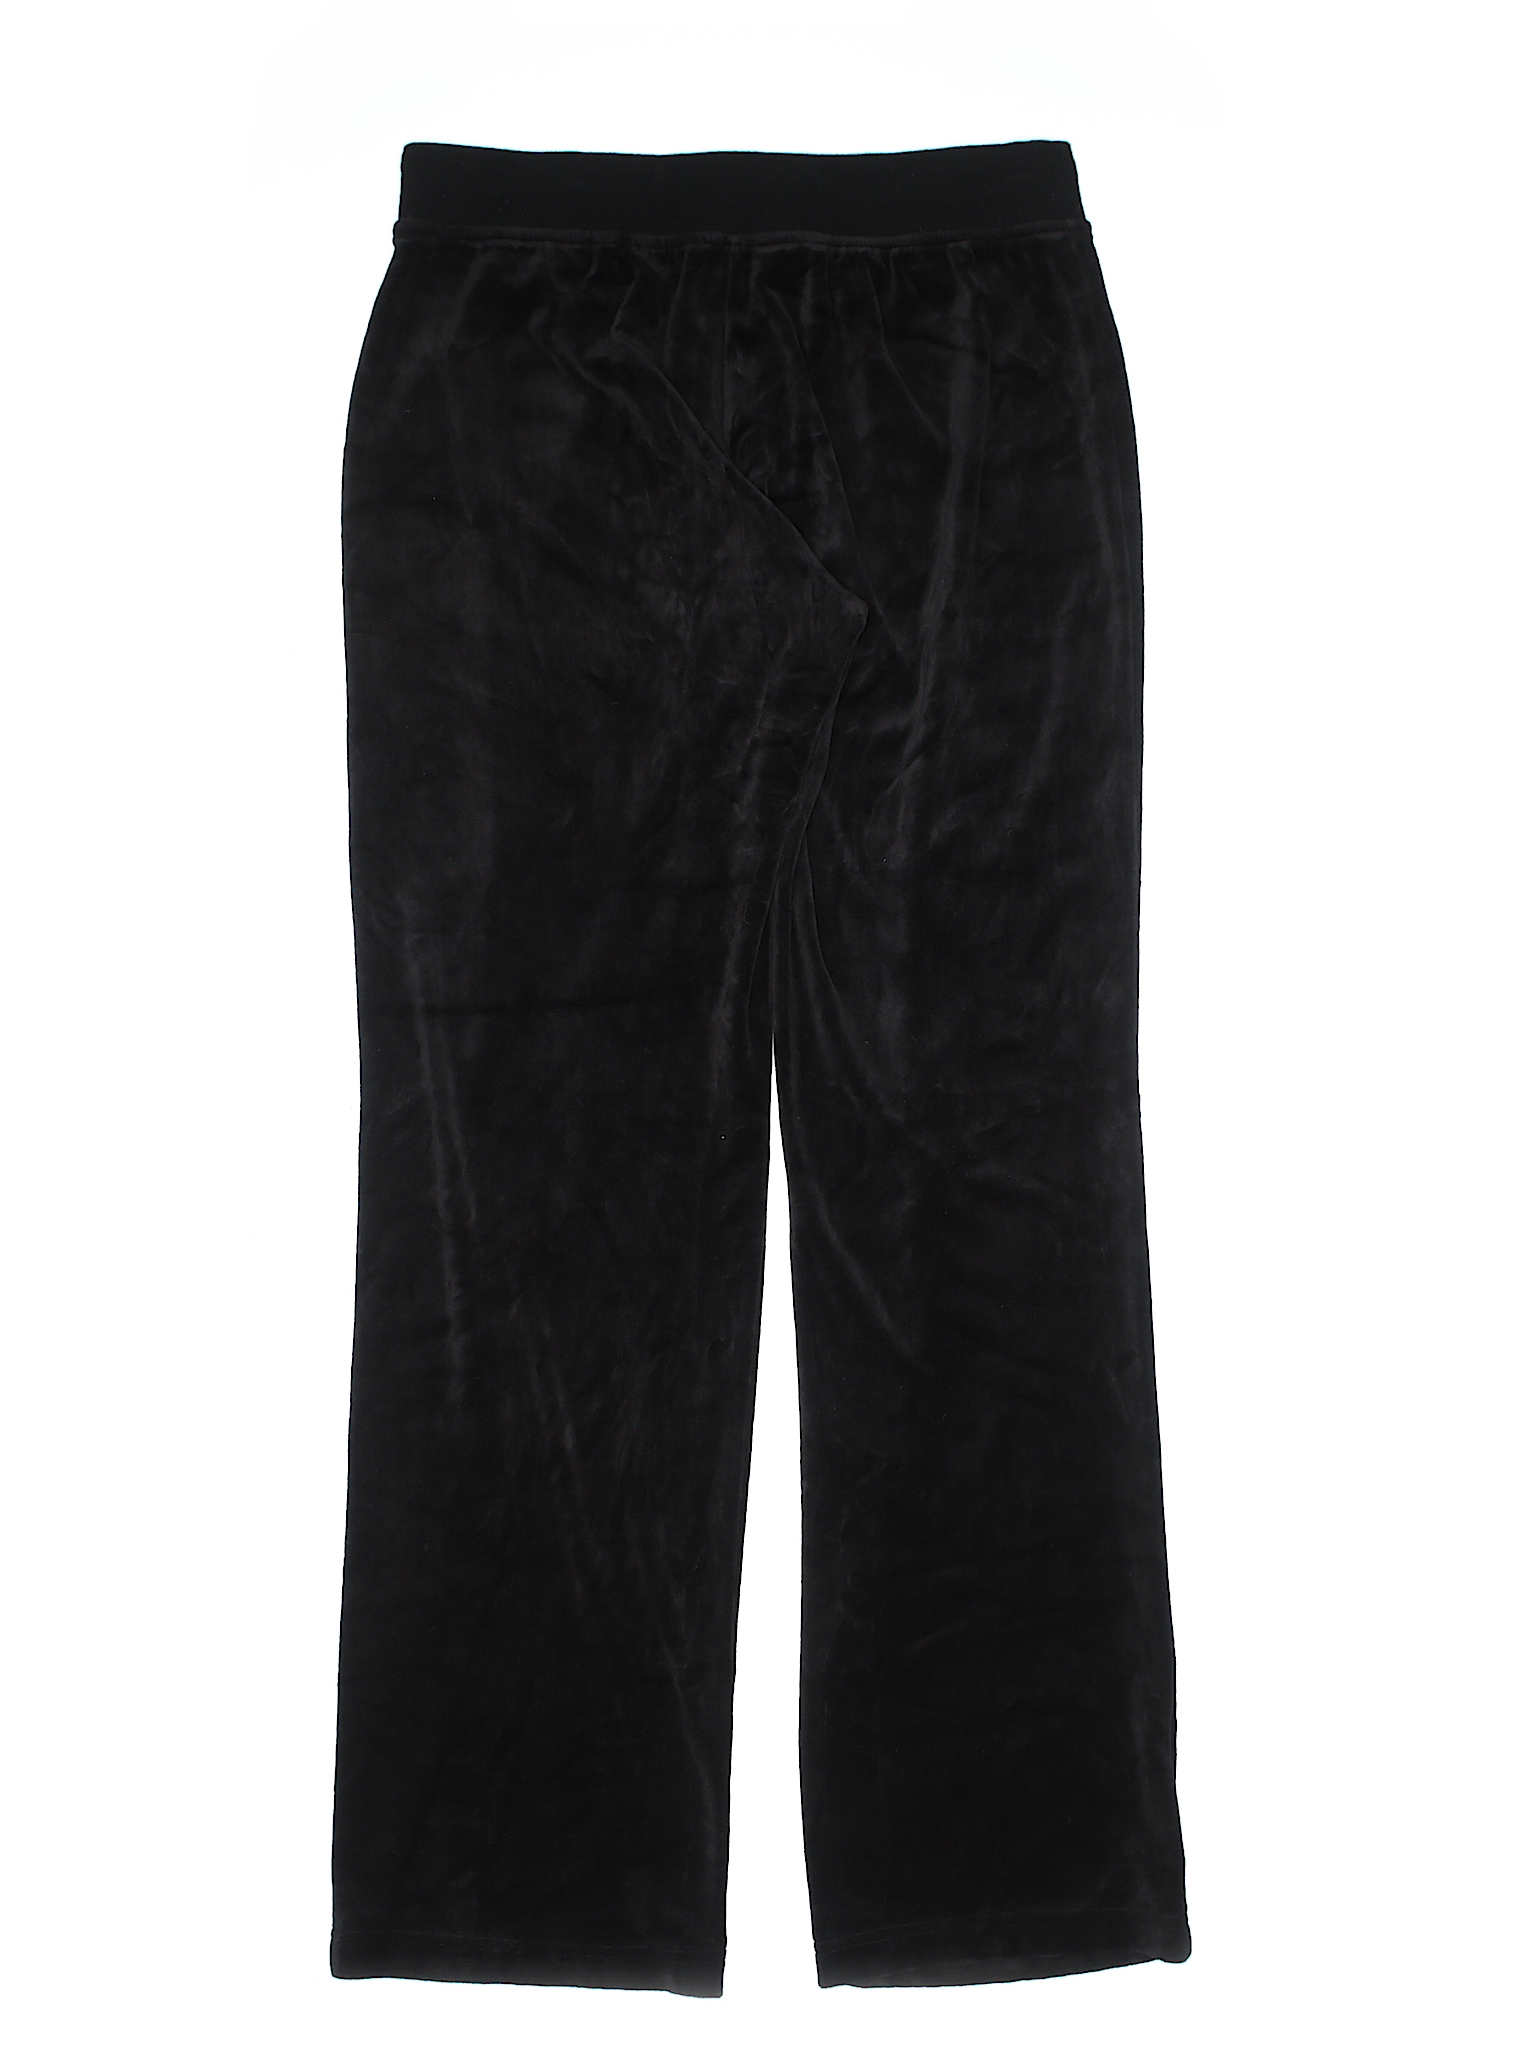 Made for Life Slit Athletic Pants for Women | Mercari